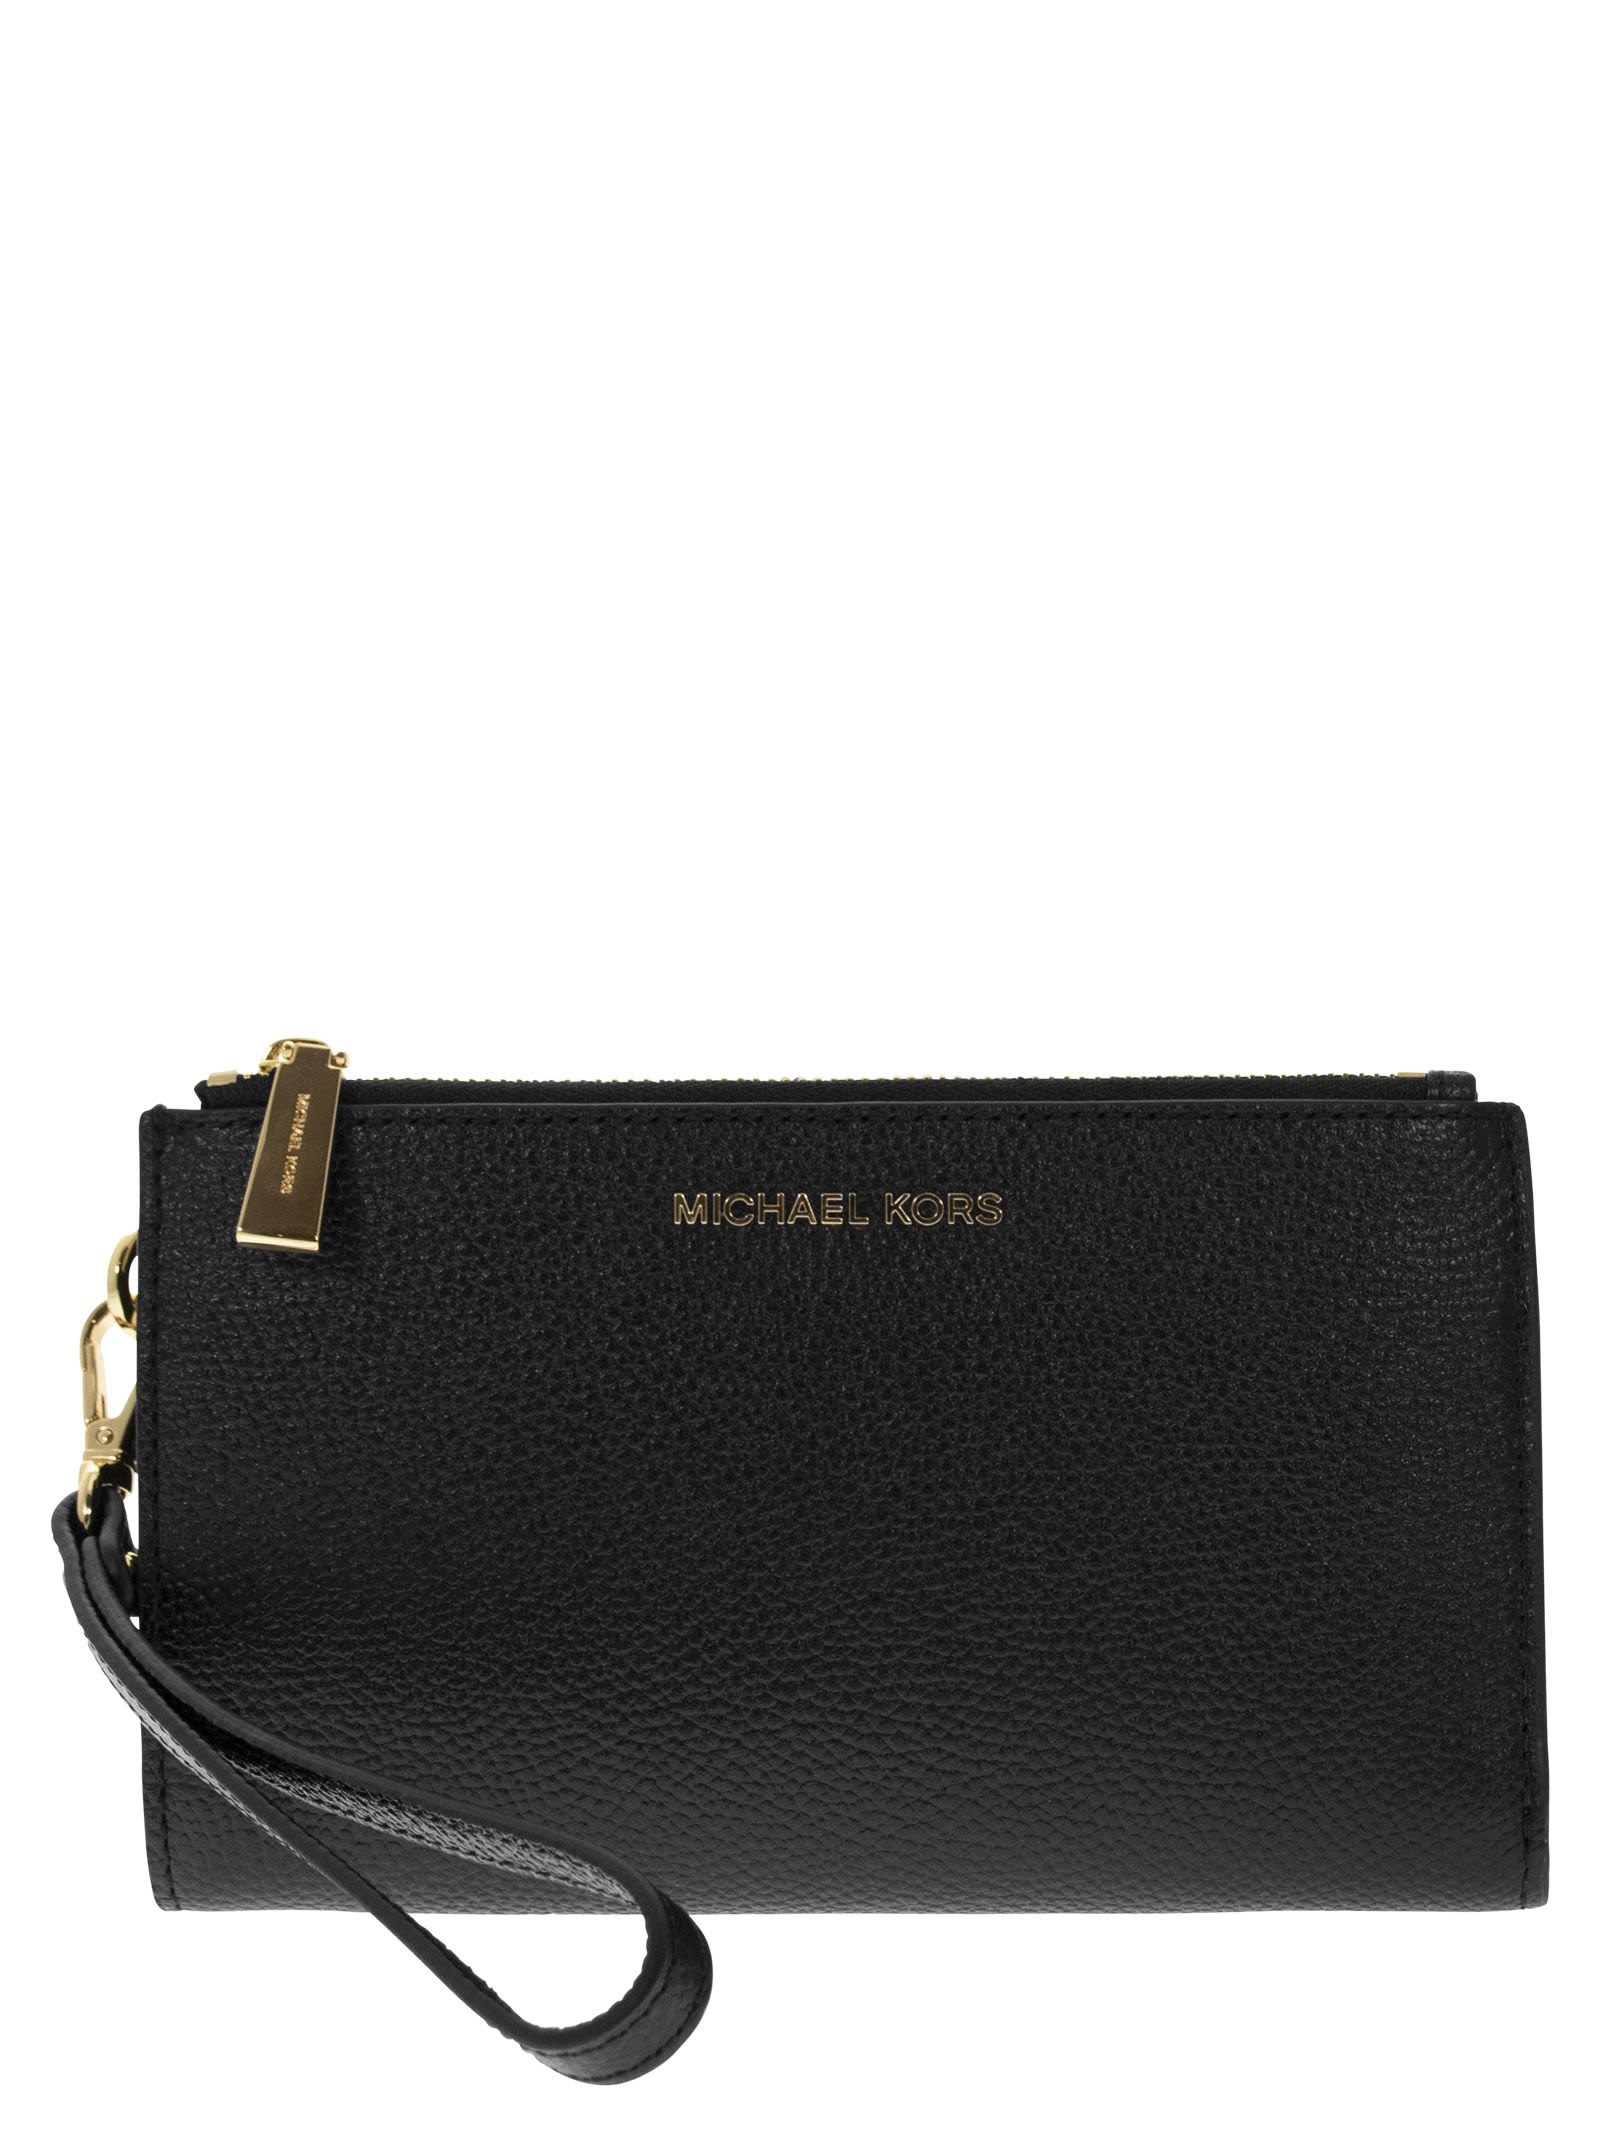 Michael Kors Adele Grained Leather Smartphone Wallet  In Black